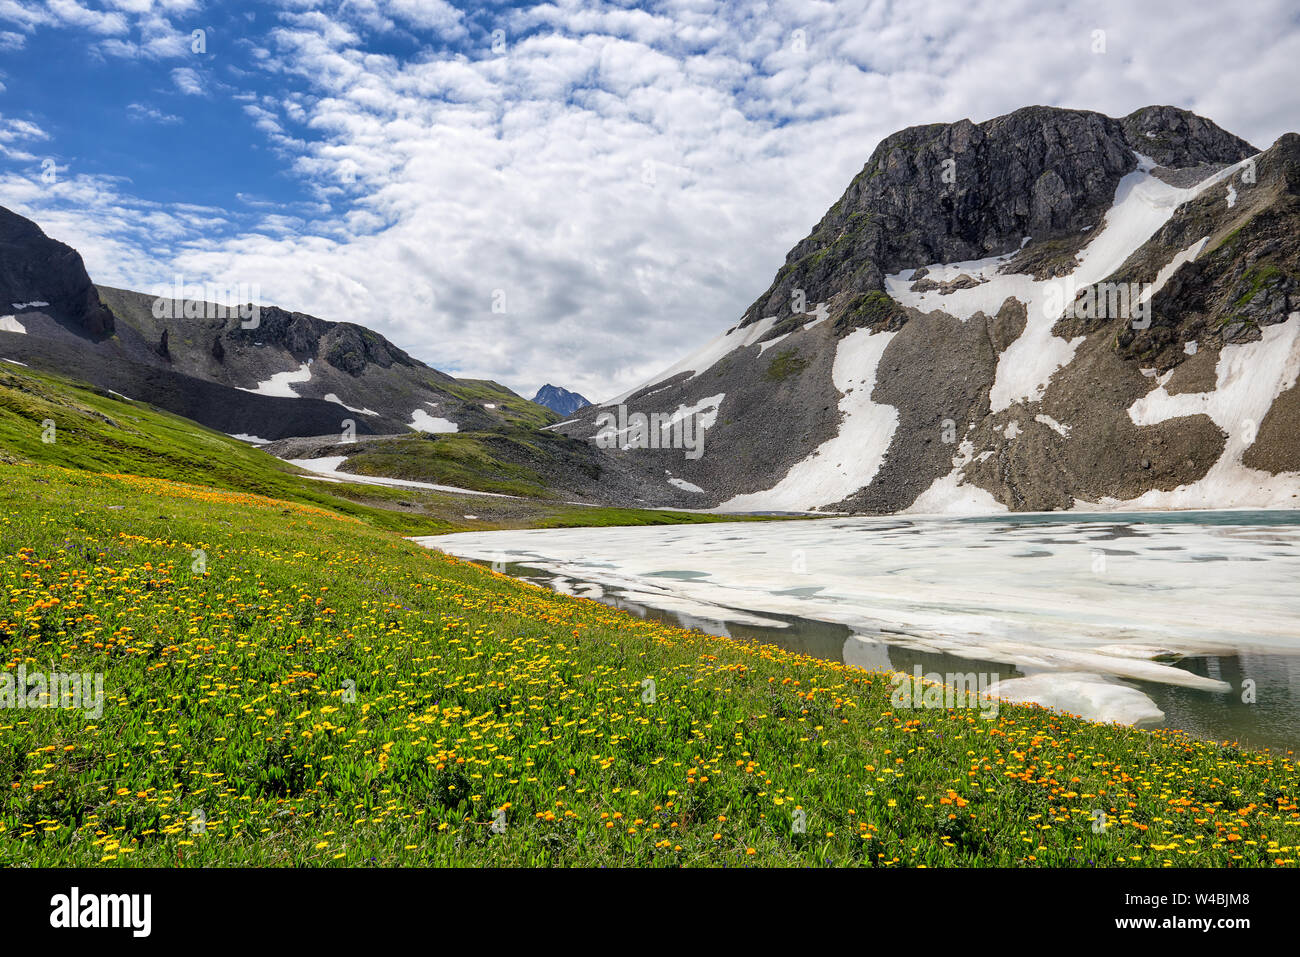 Blühende Bergwiese neben Eis der Bergsee. Juli. Tiva Republik. Zentralasien Stockfoto